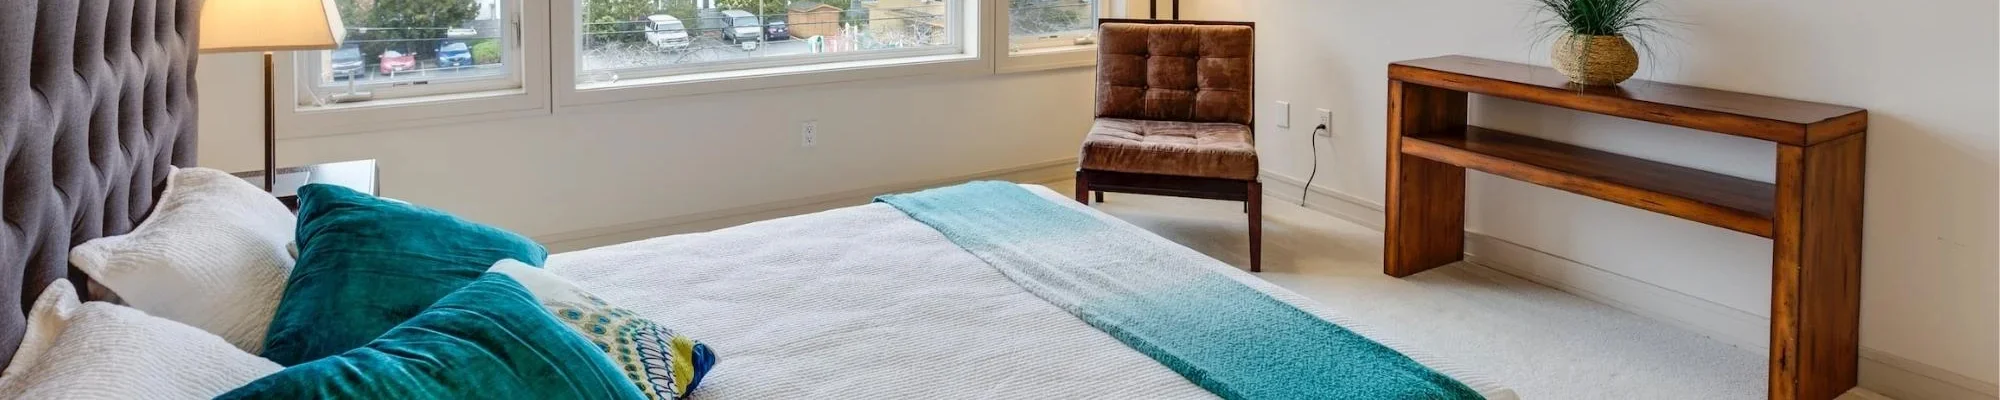 Carpet flooring in a bedroom in Rapid City, SD area | Altimate Flooring